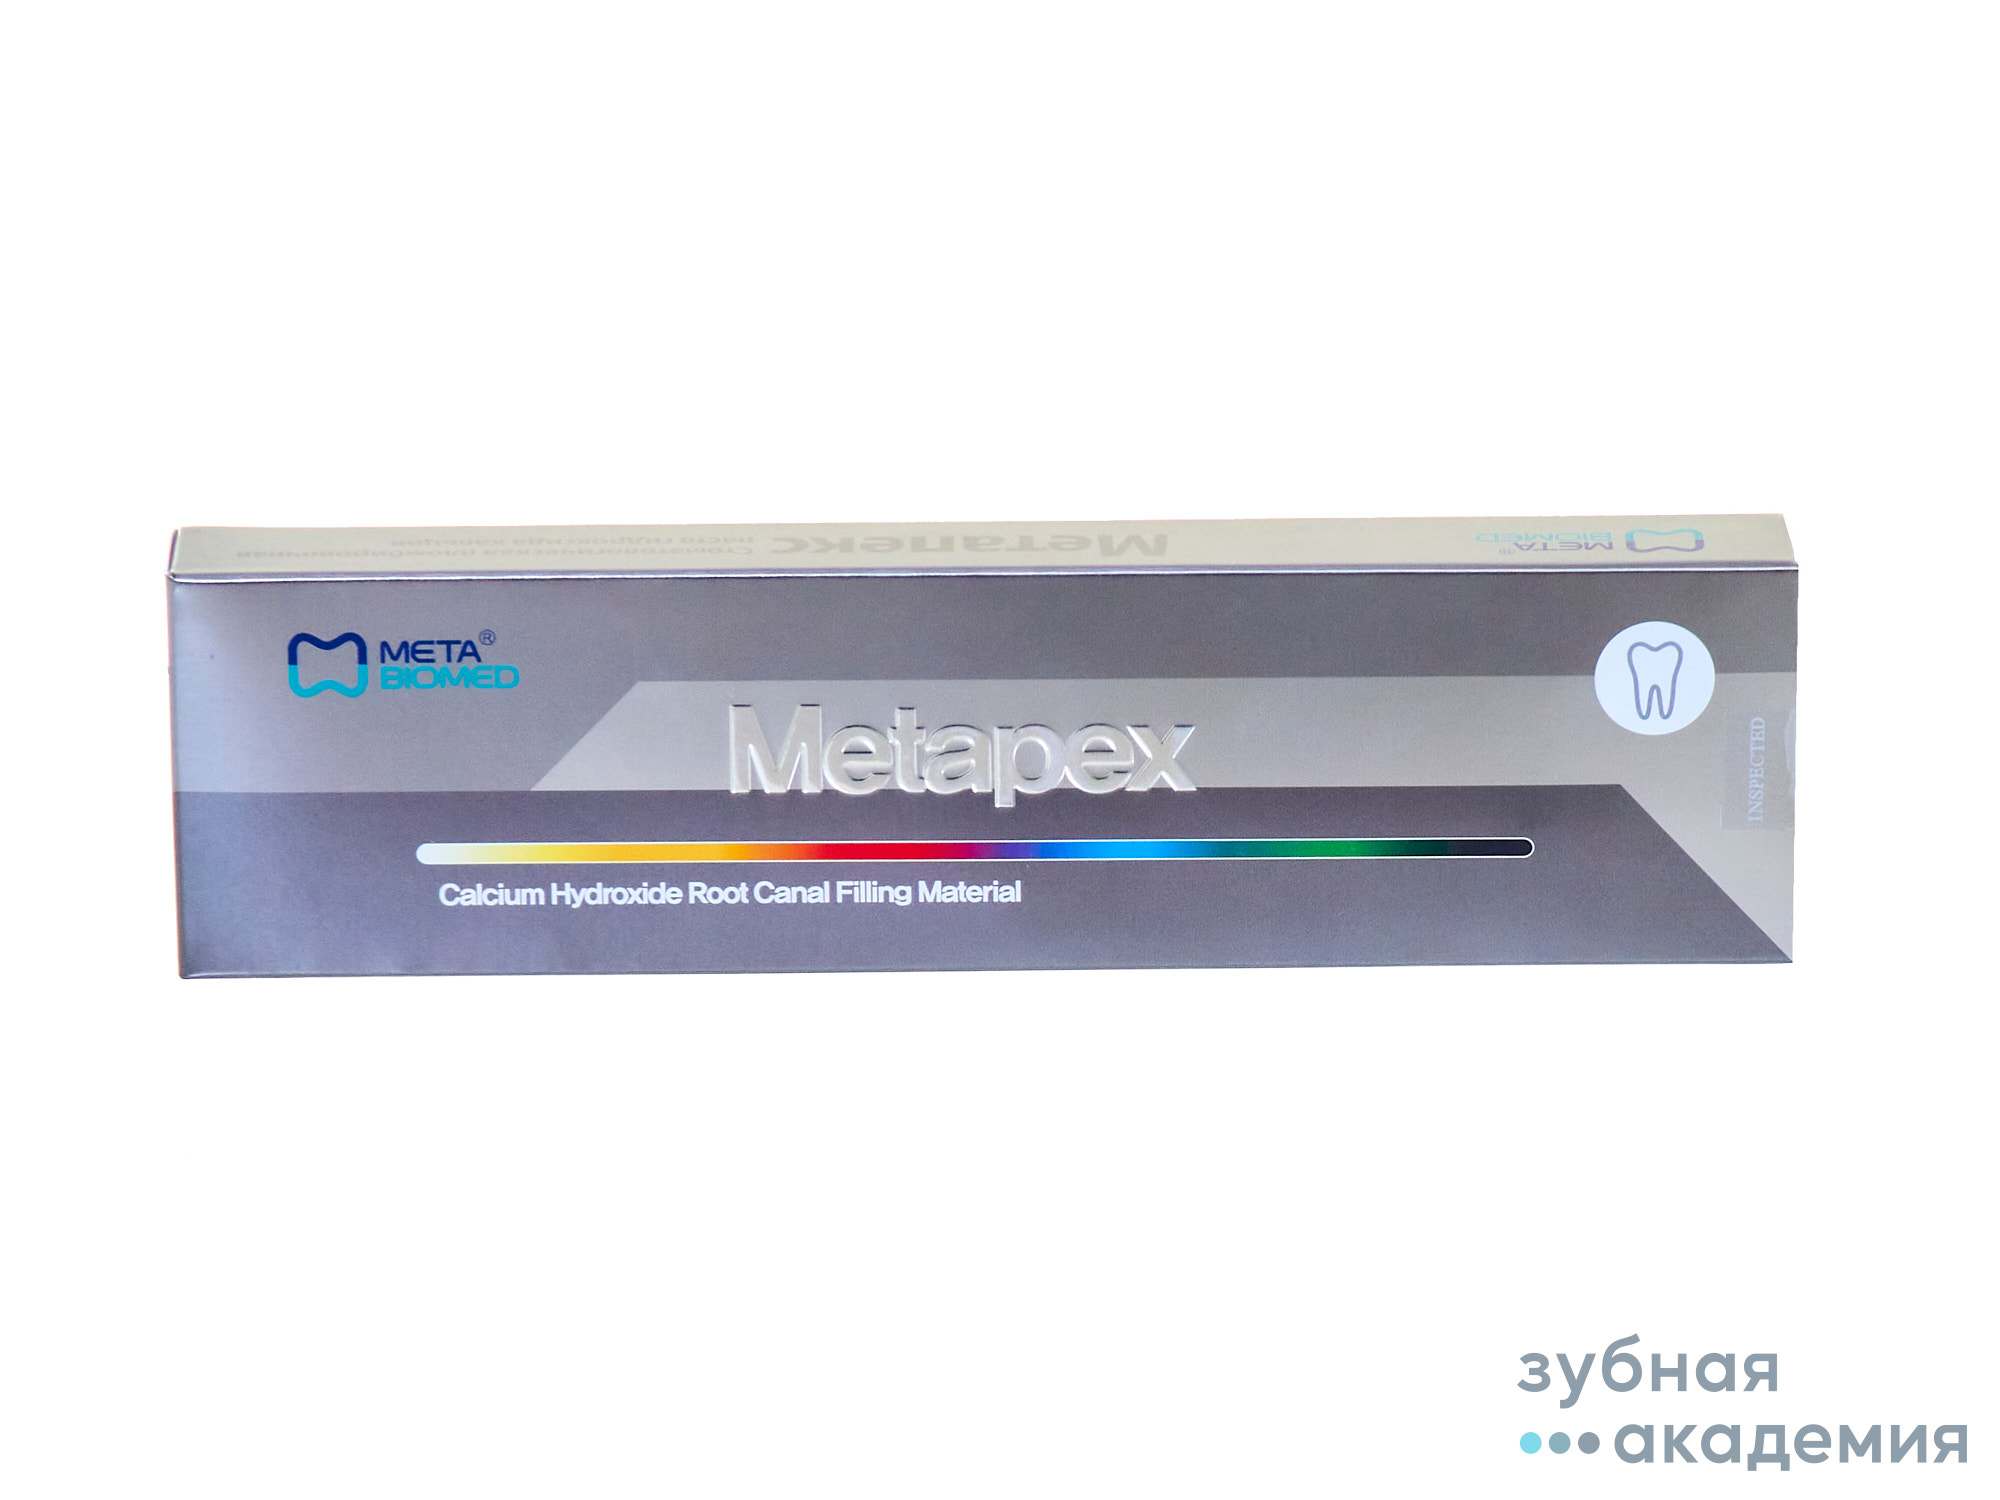 Metapex Метапекс упаковка 2 шприца 2,2 г +10 канюль /Meta Biomed/ Корея